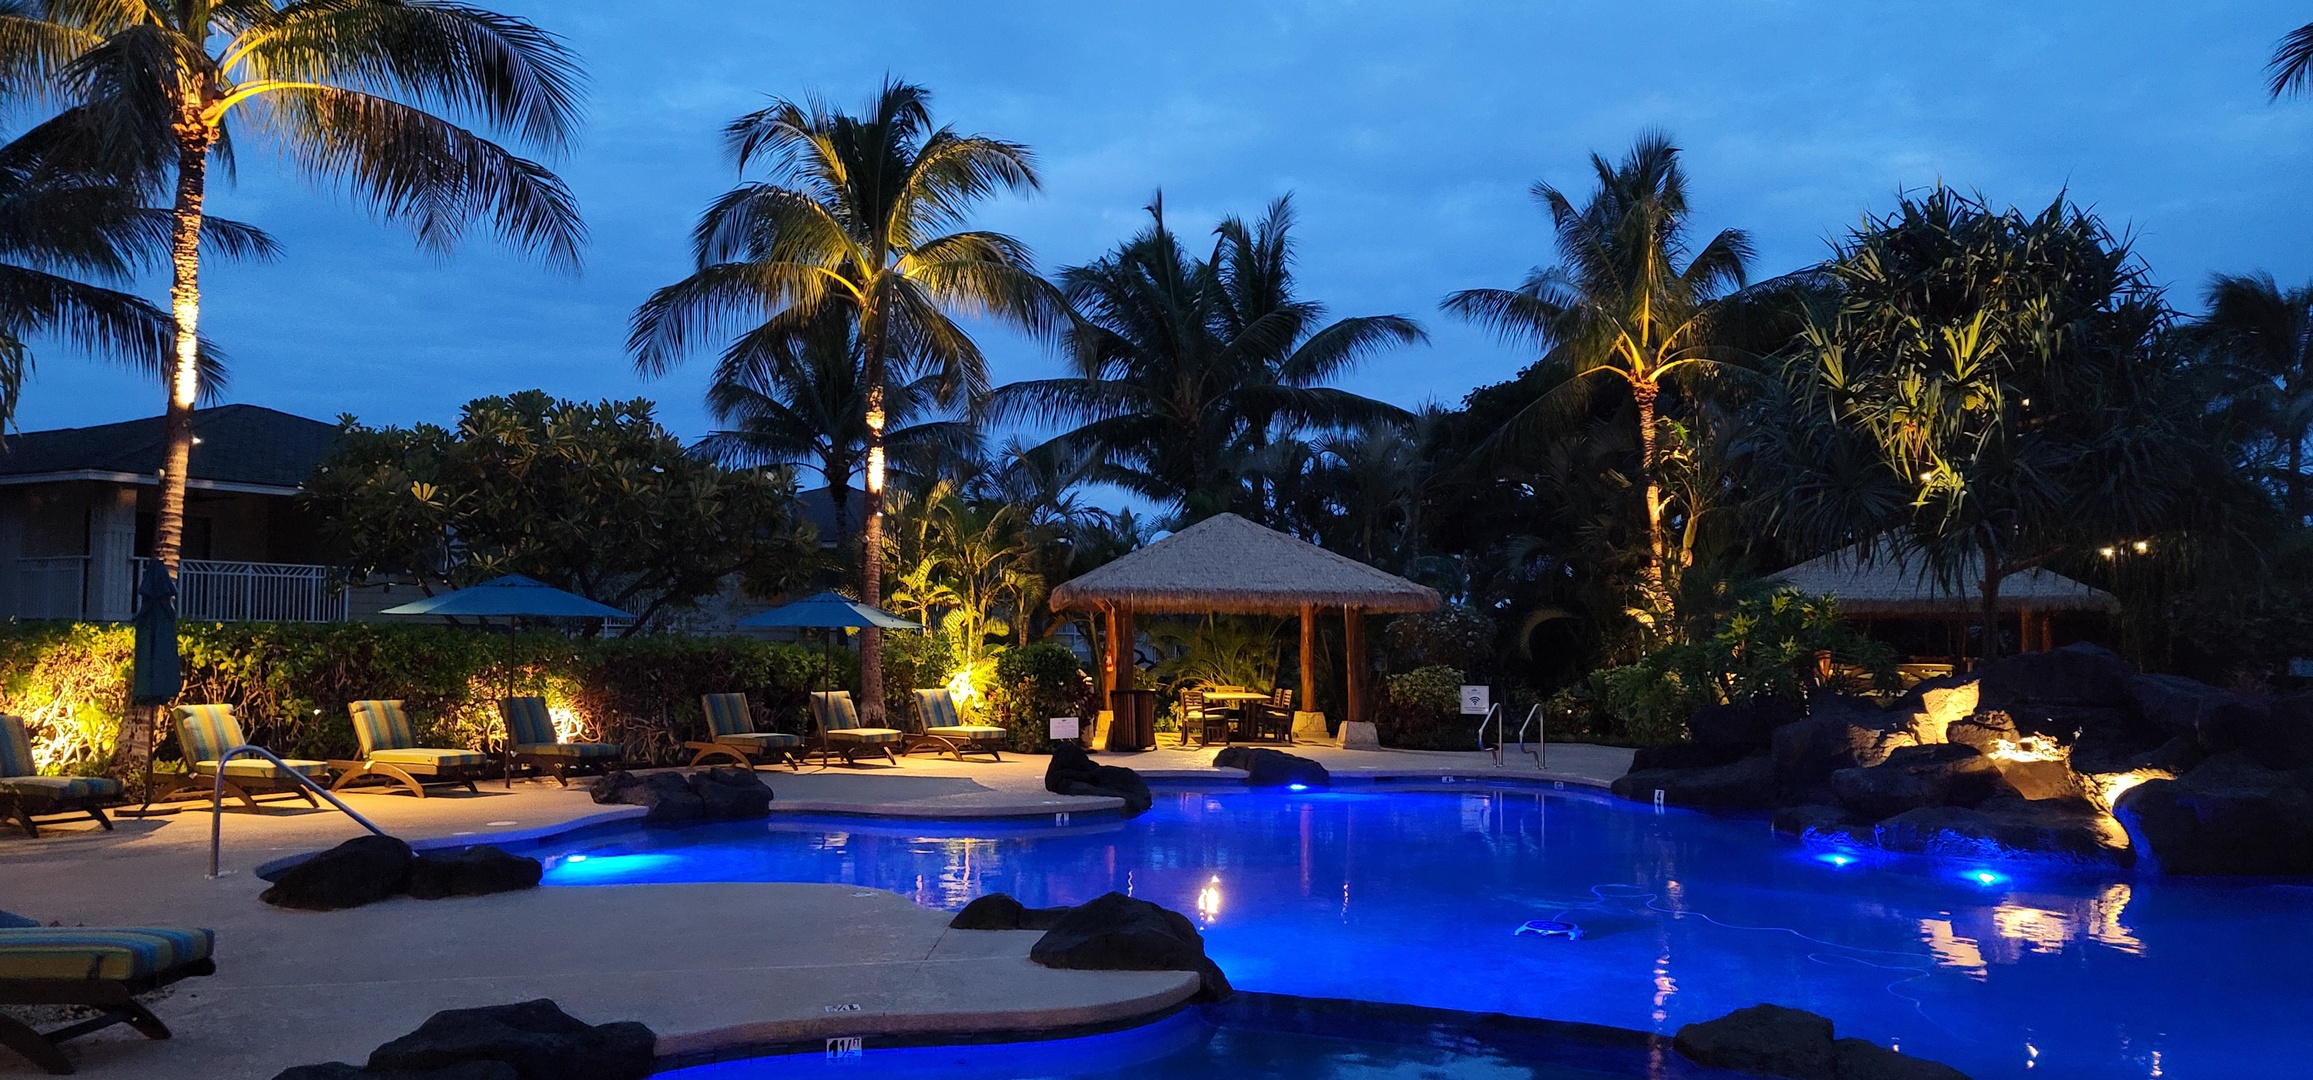 Kapolei Vacation Rentals, Ko Olina Kai 1027A - The enchanting pool by night.